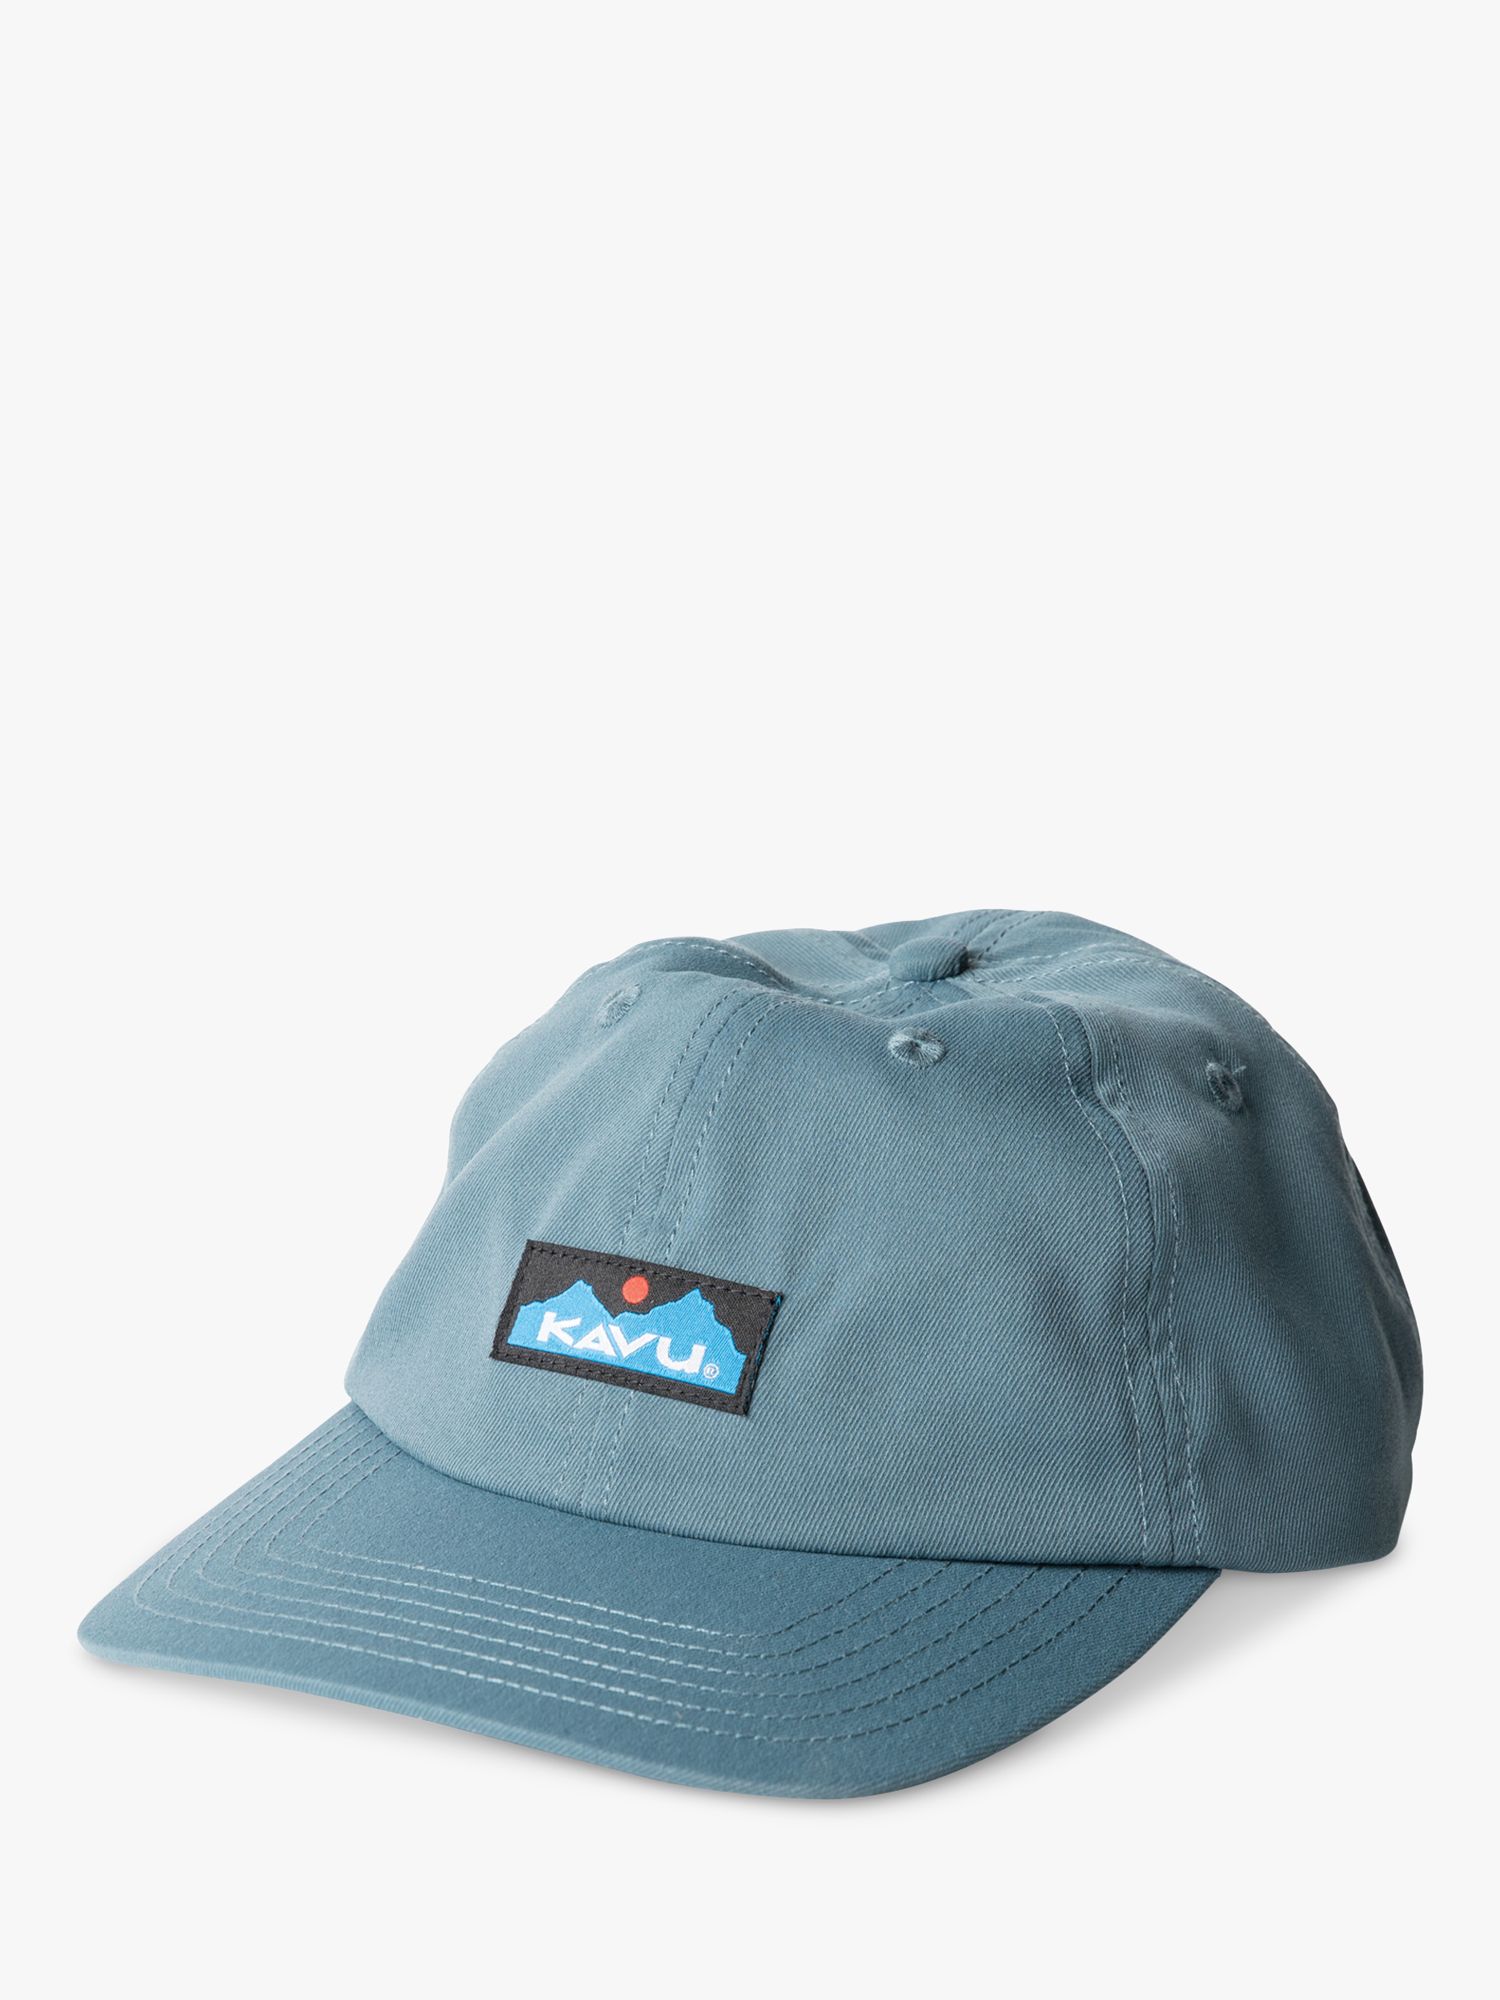 Buy KAVU Ballard Classic Hat, Blue Online at johnlewis.com